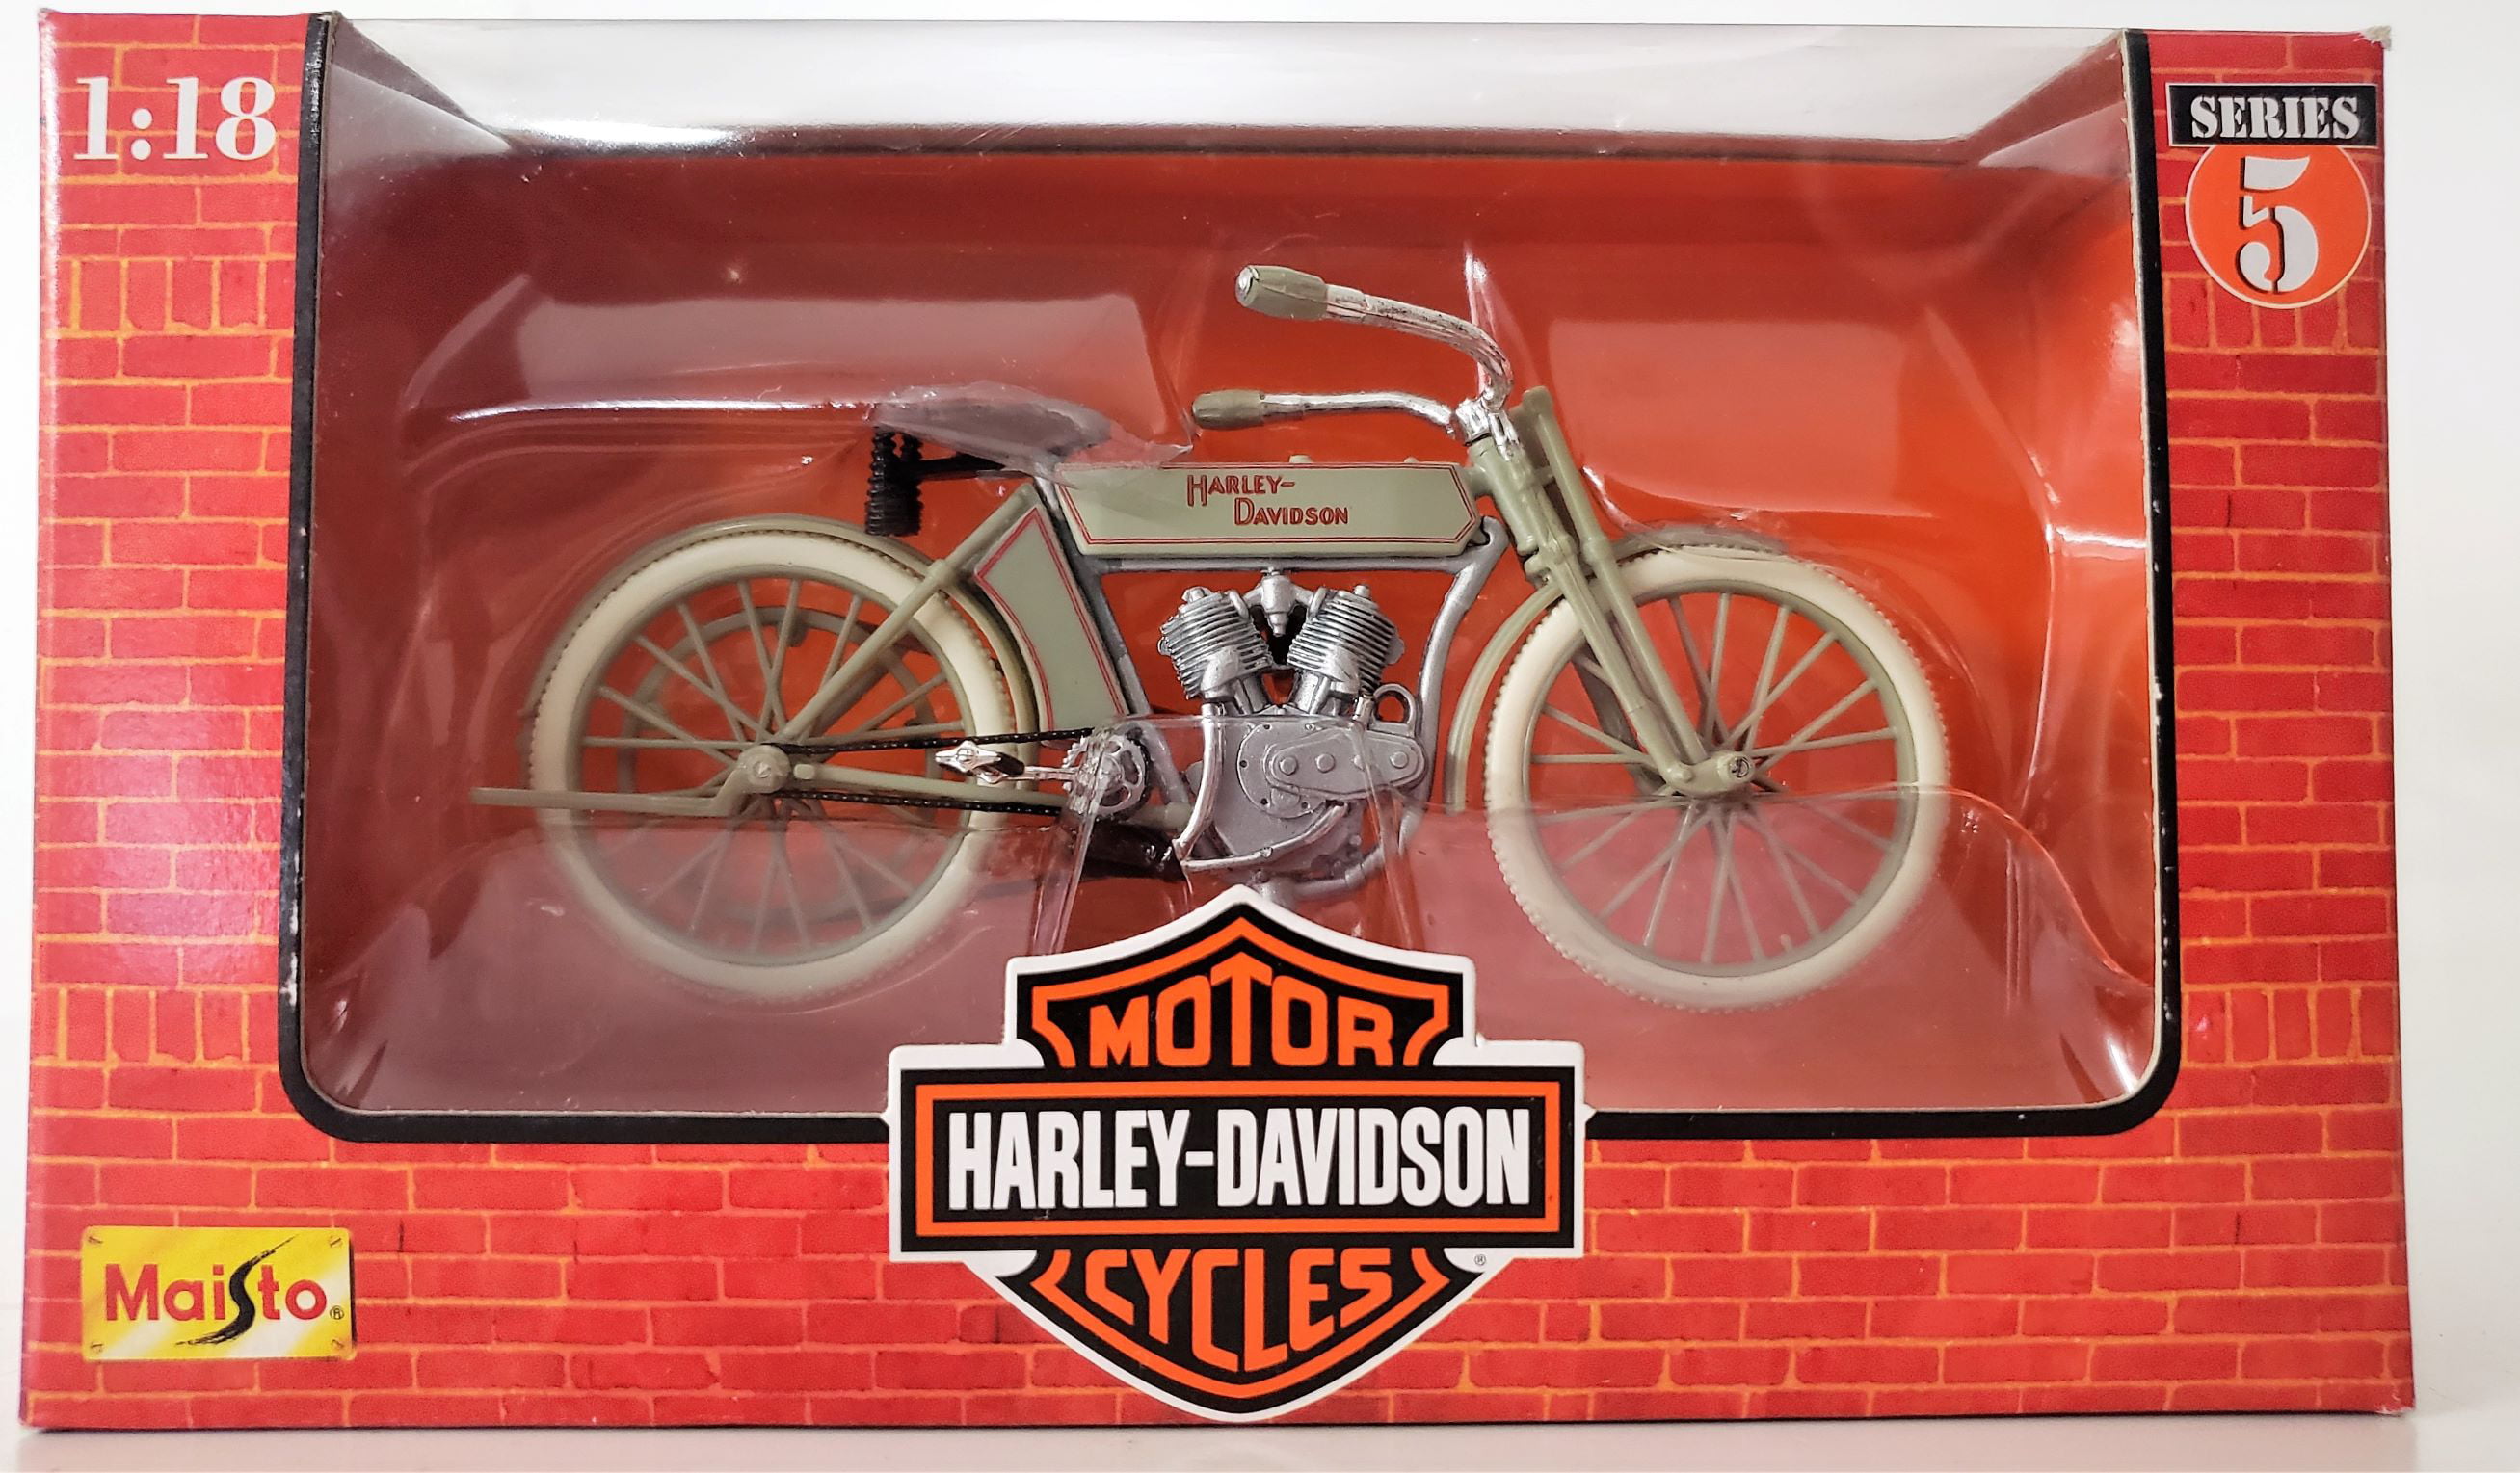 1:18 Maisto Harley Davidson 1909 TWIN 5D V-TWIN Bike Motorcycle Model 